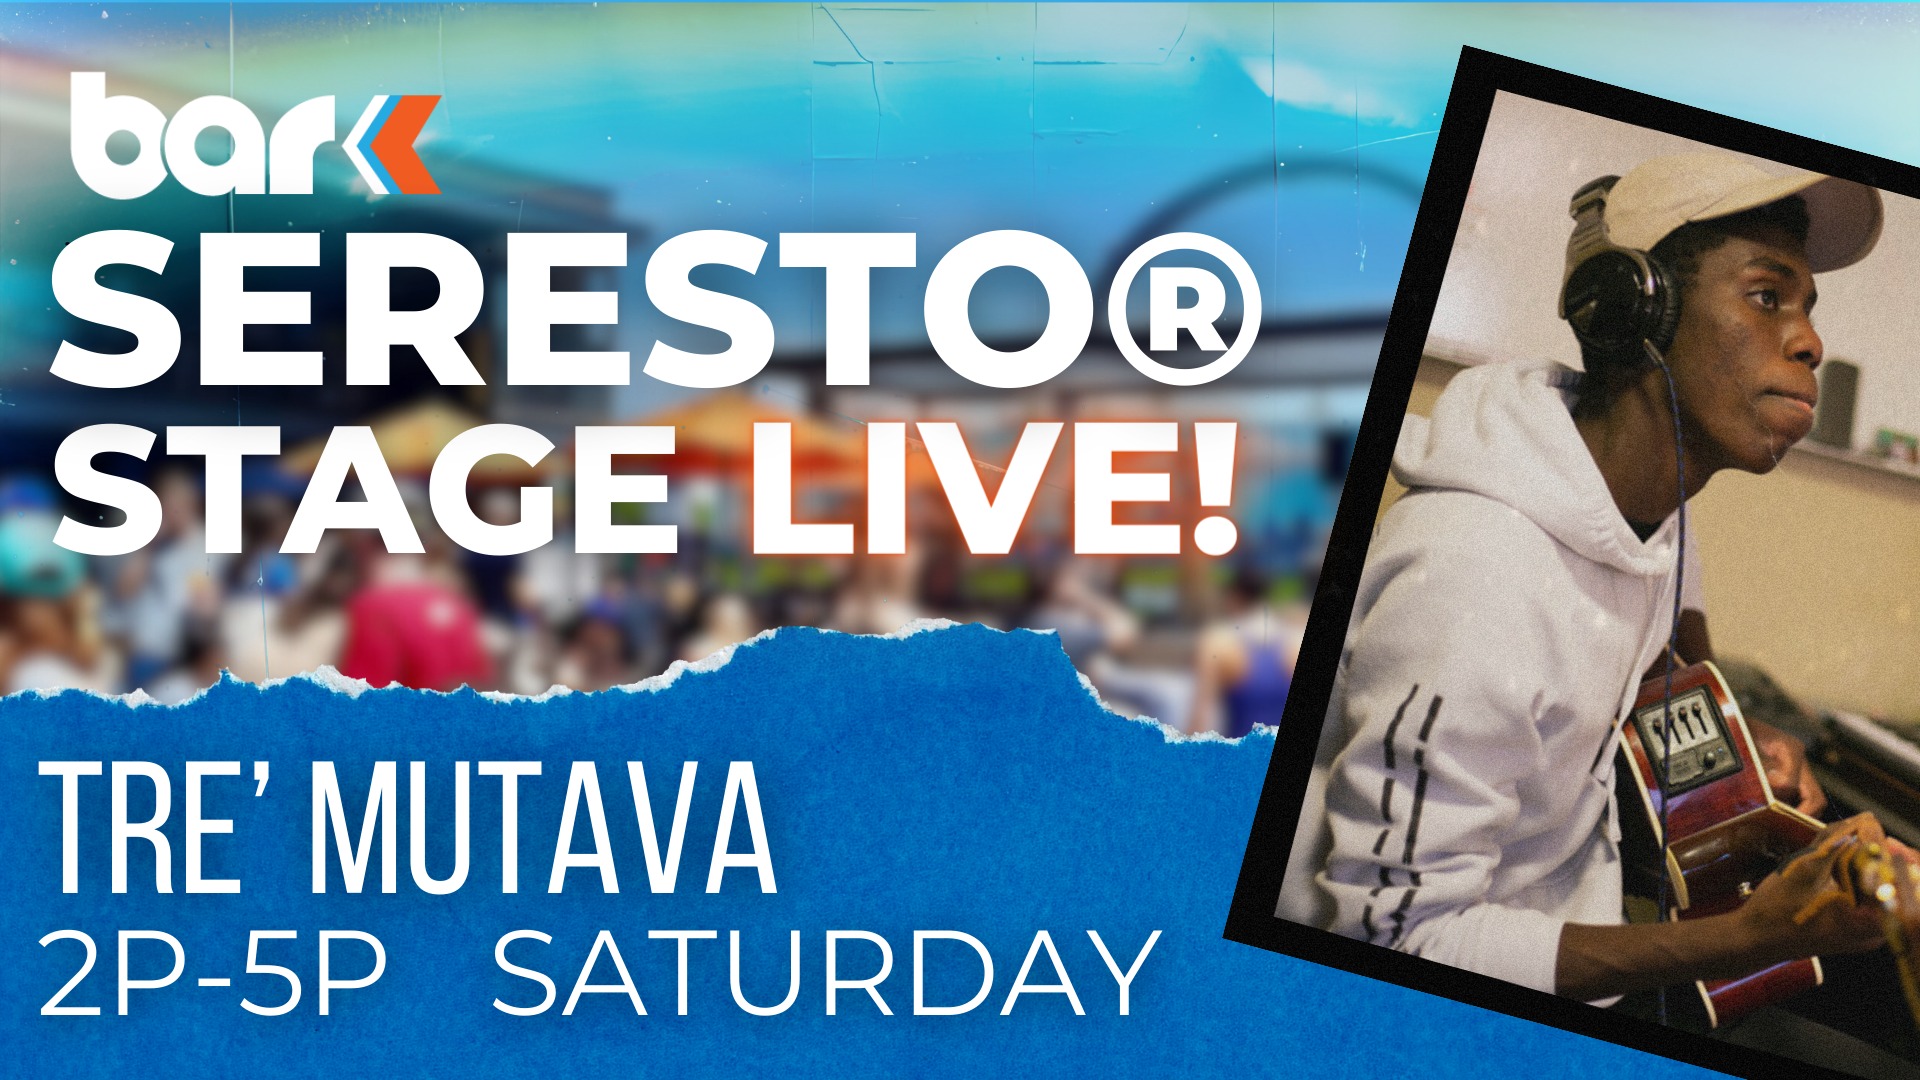 Main wearing headphones playing guitar text - Bar K Seresto Stage Live! Tre' Mutava 2pm to 5pm Saturday